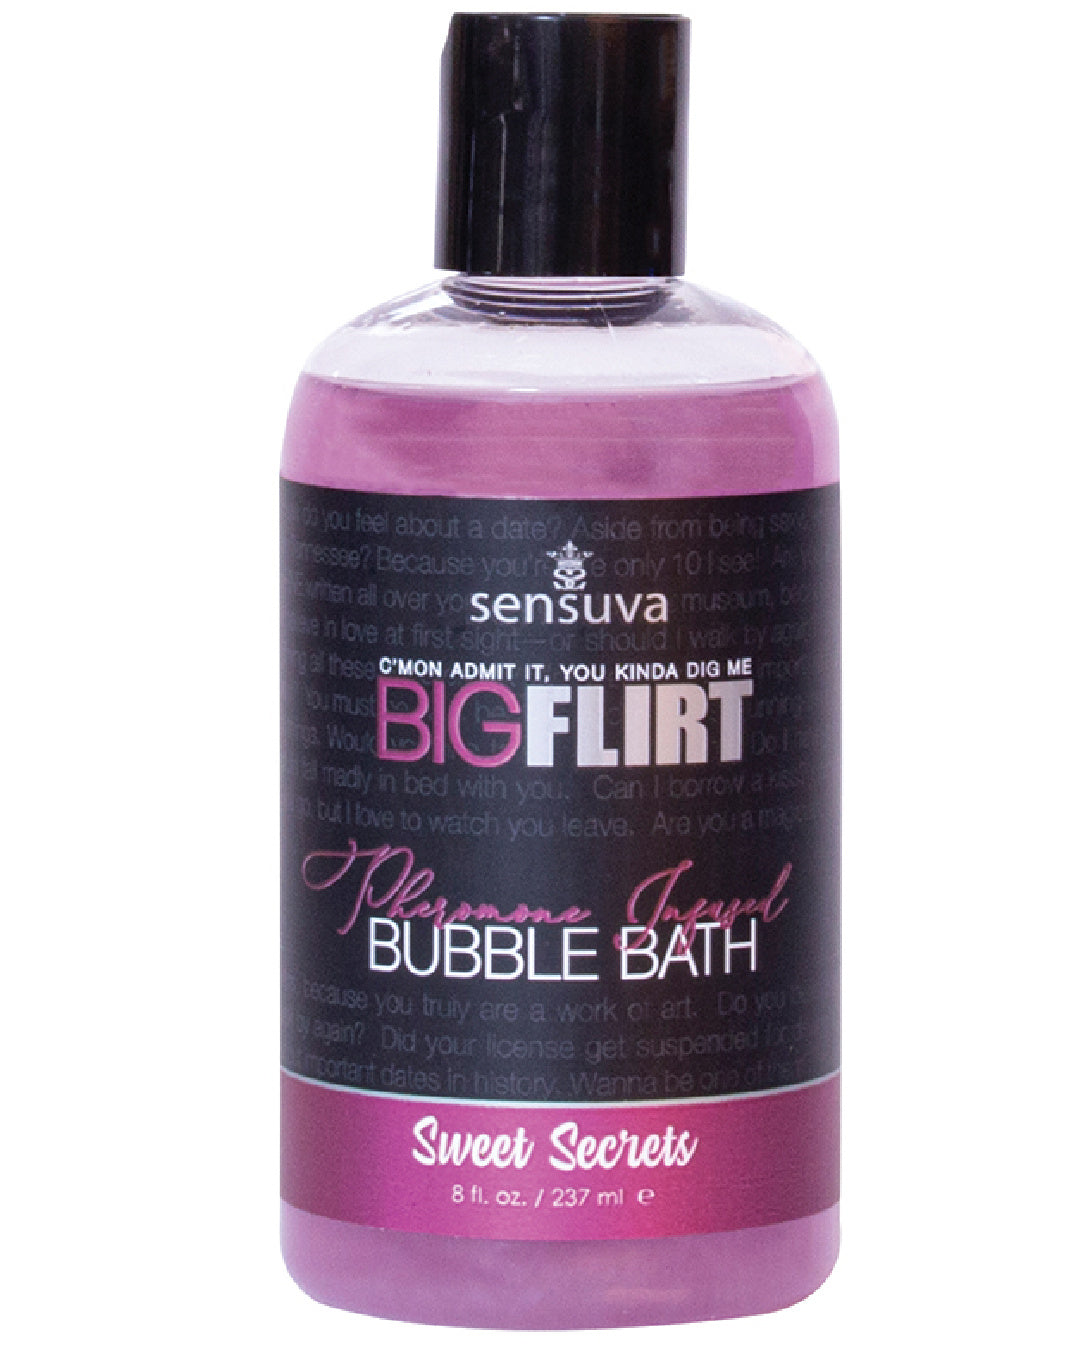 Big Flirt Pheromone Infused Bubble Bath 8 oz - Sweet Secrets front of bottle 